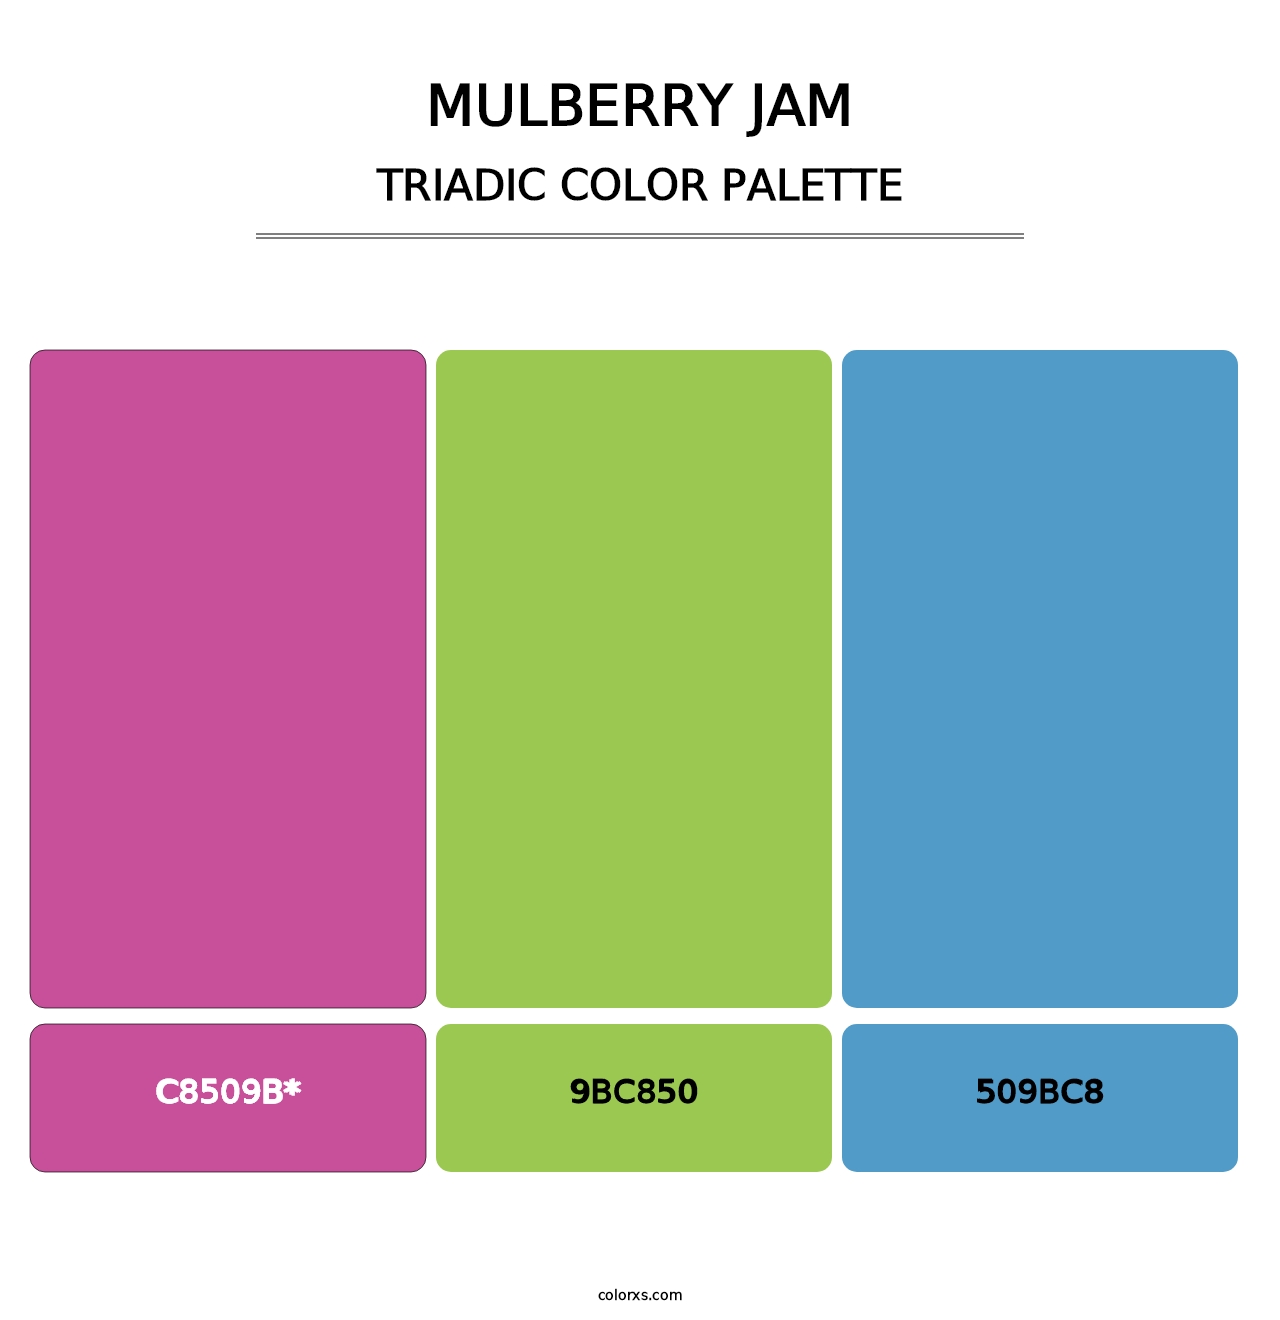 Mulberry Jam - Triadic Color Palette